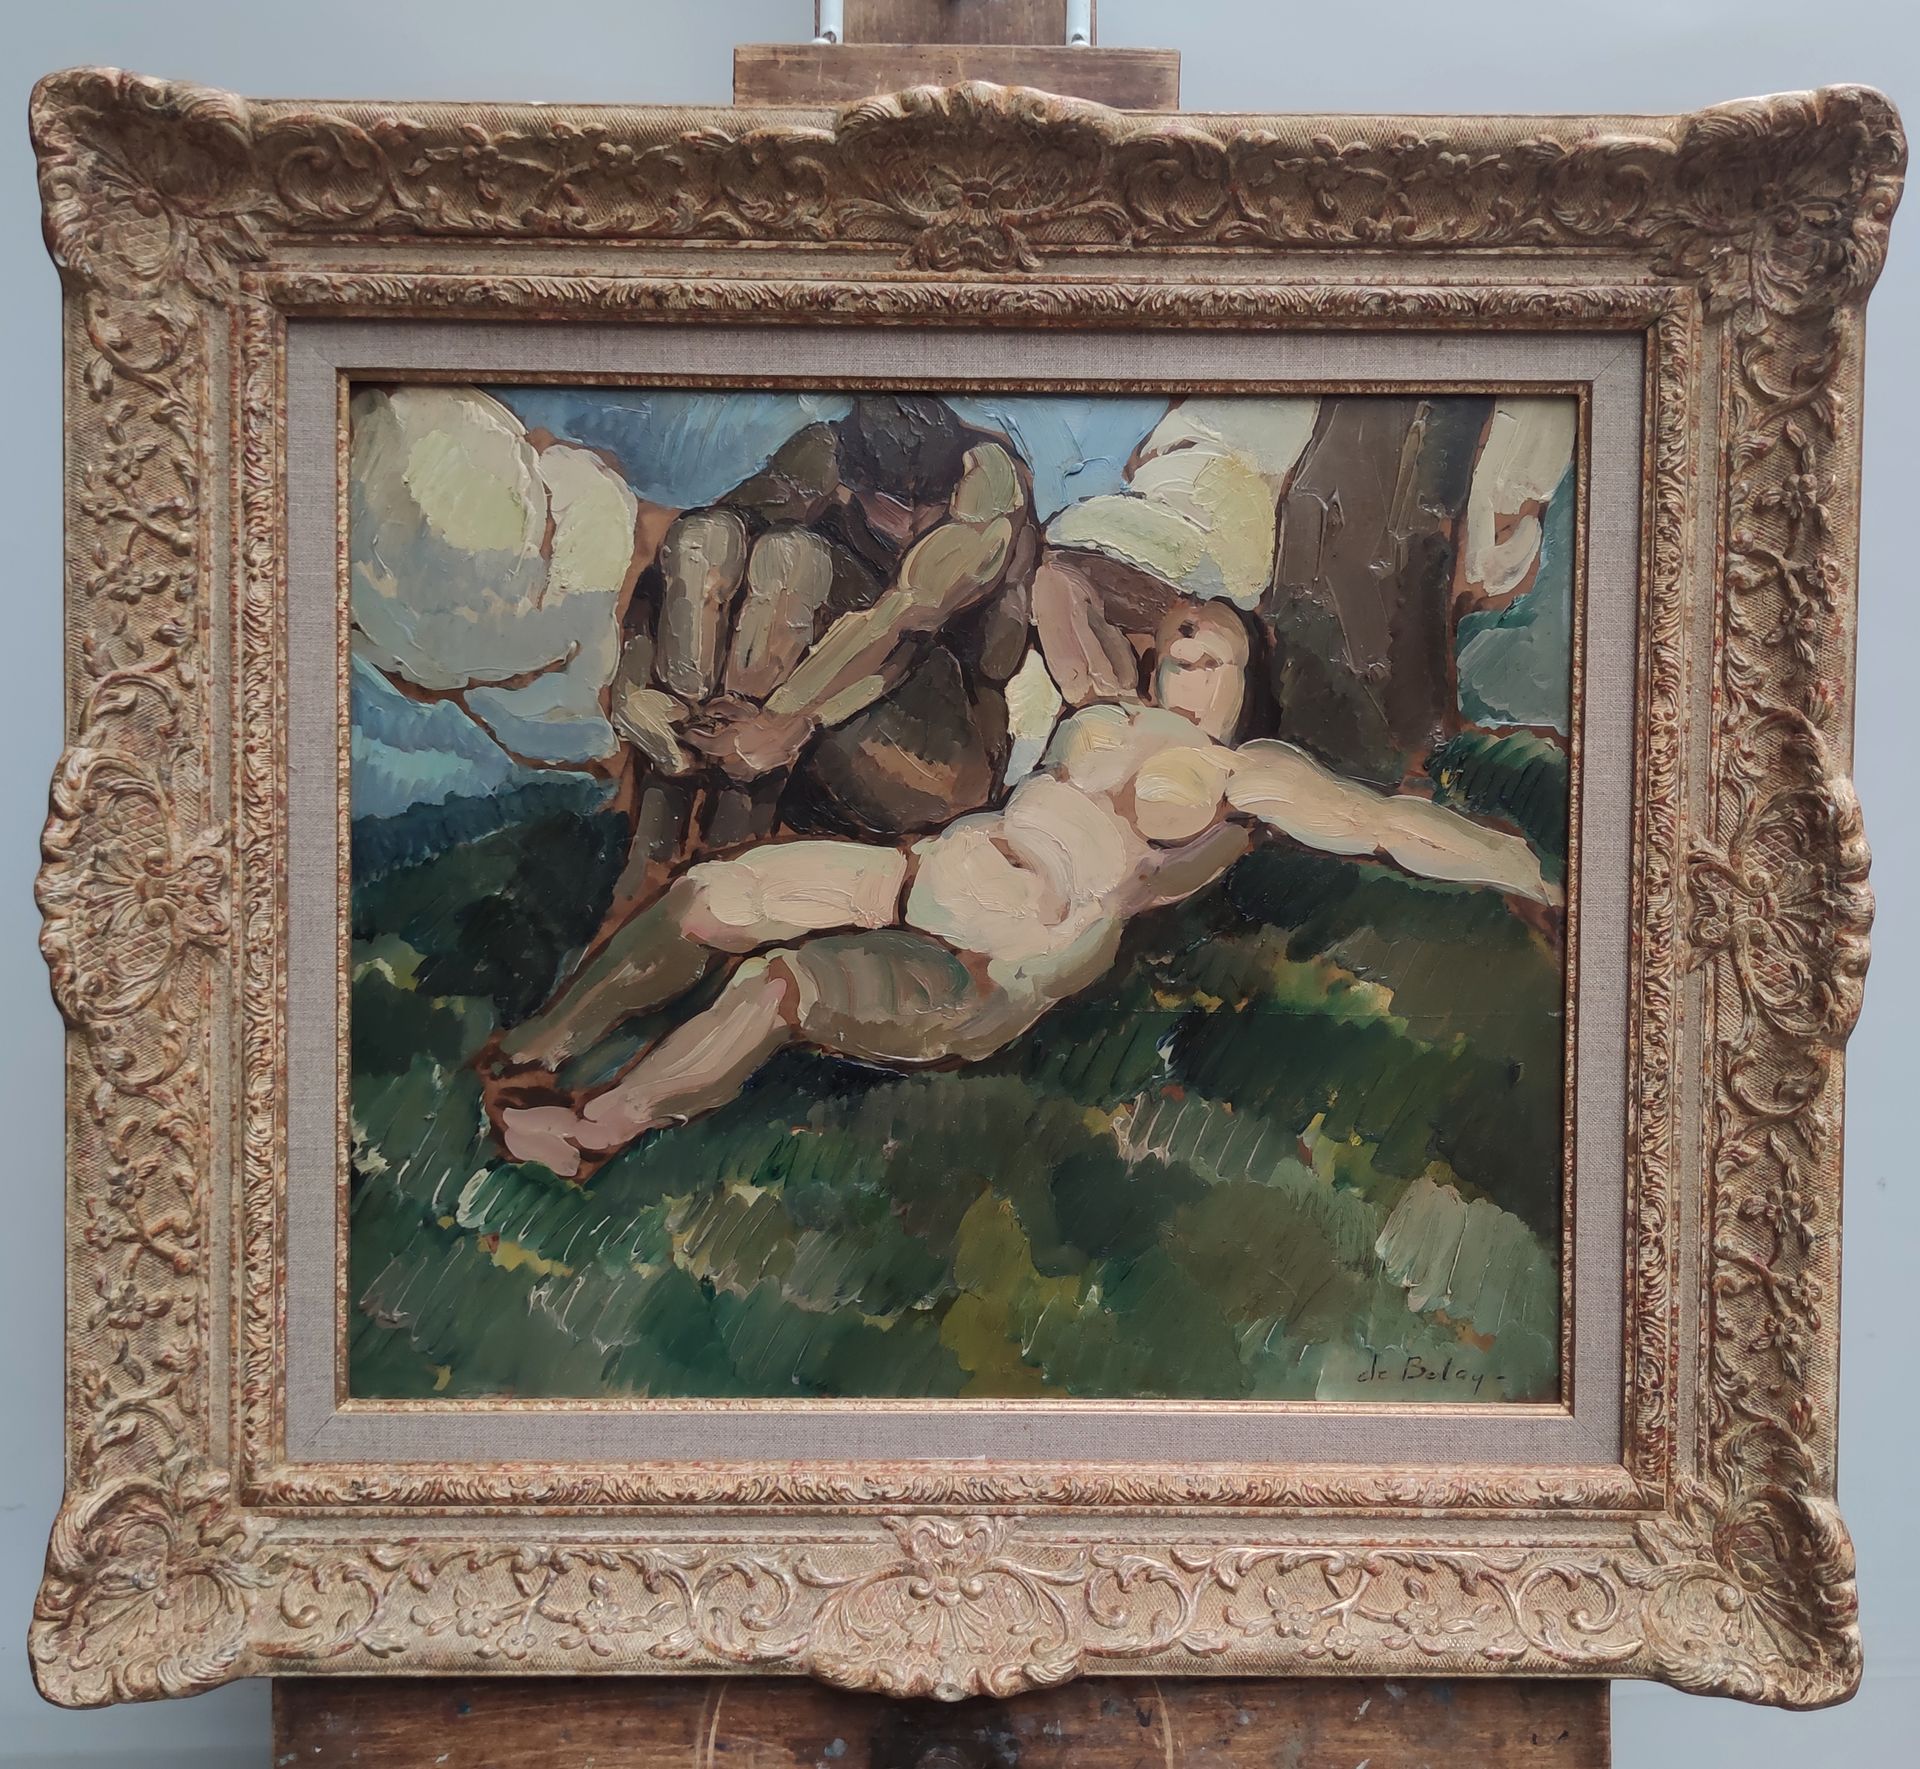 Null 
皮埃尔-德-贝莱 (1890-1947)

在树脚下的情侣

布面油画，右下角有签名

46 X 55厘米

出处：阿维尼翁拍卖会，1987年4月，&hellip;